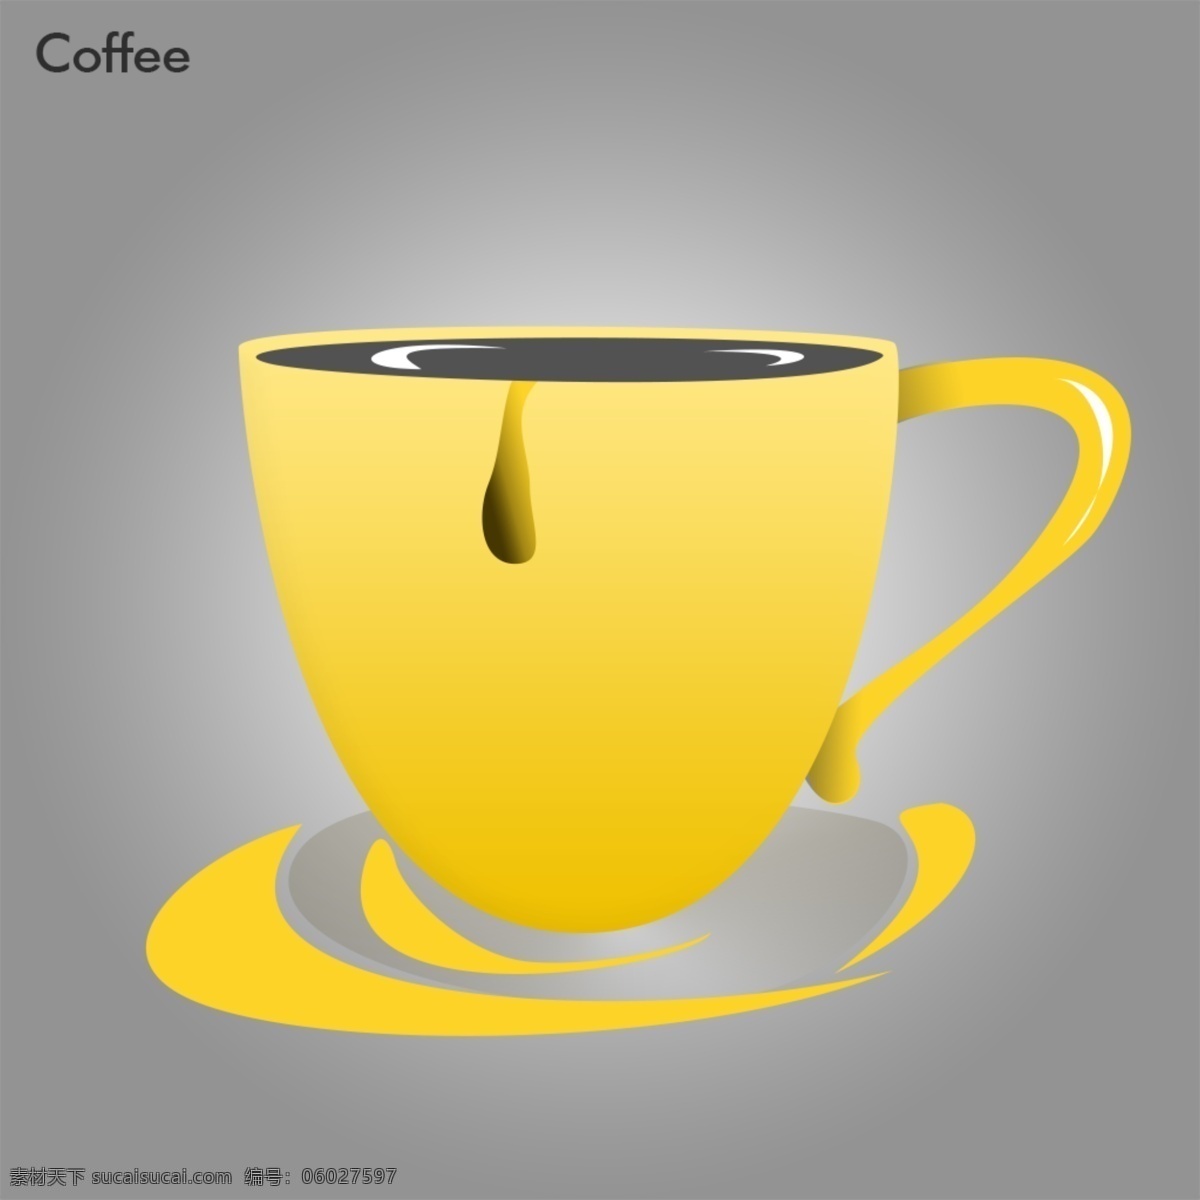 咖啡杯 icon 图标 图标设计 icon设计 icon图标 网页图标 咖啡杯图标 咖啡